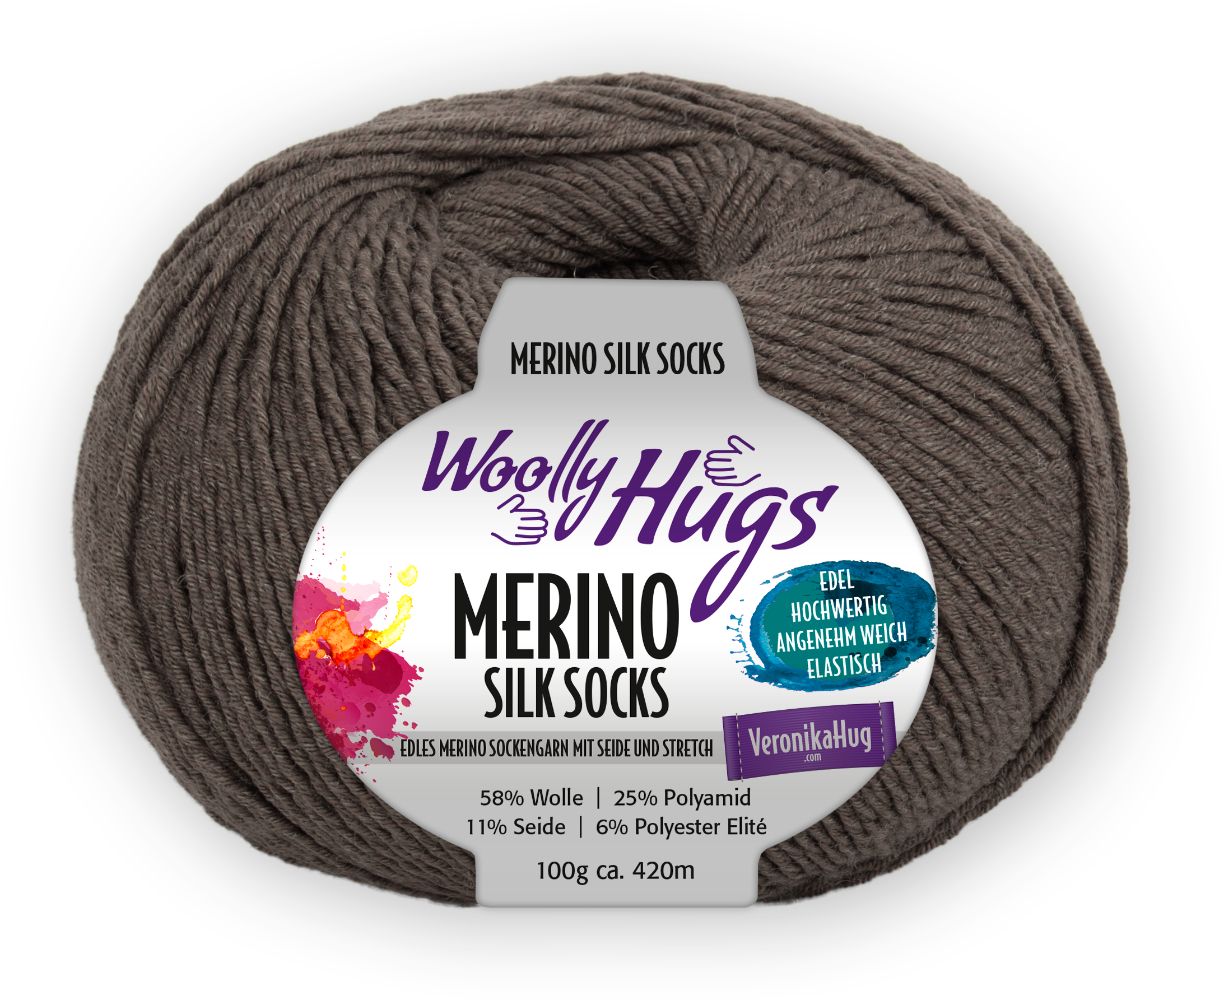 Merino Silk Socks Stretch, 4-fach von Woolly Hugs 0212 - holz